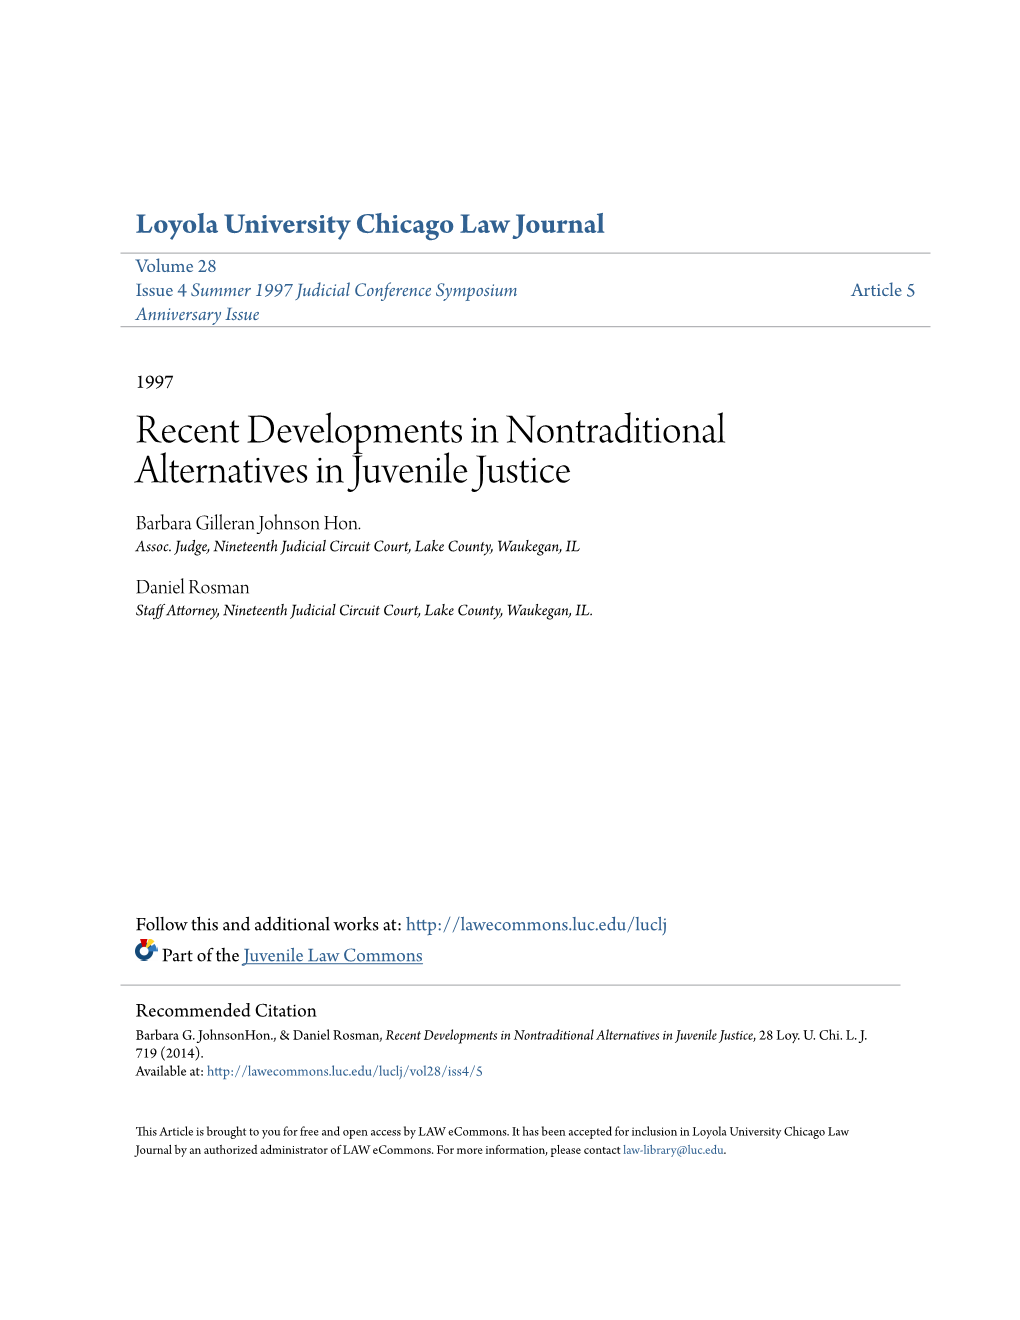 Recent Developments in Nontraditional Alternatives in Juvenile Justice Barbara Gilleran Johnson Hon